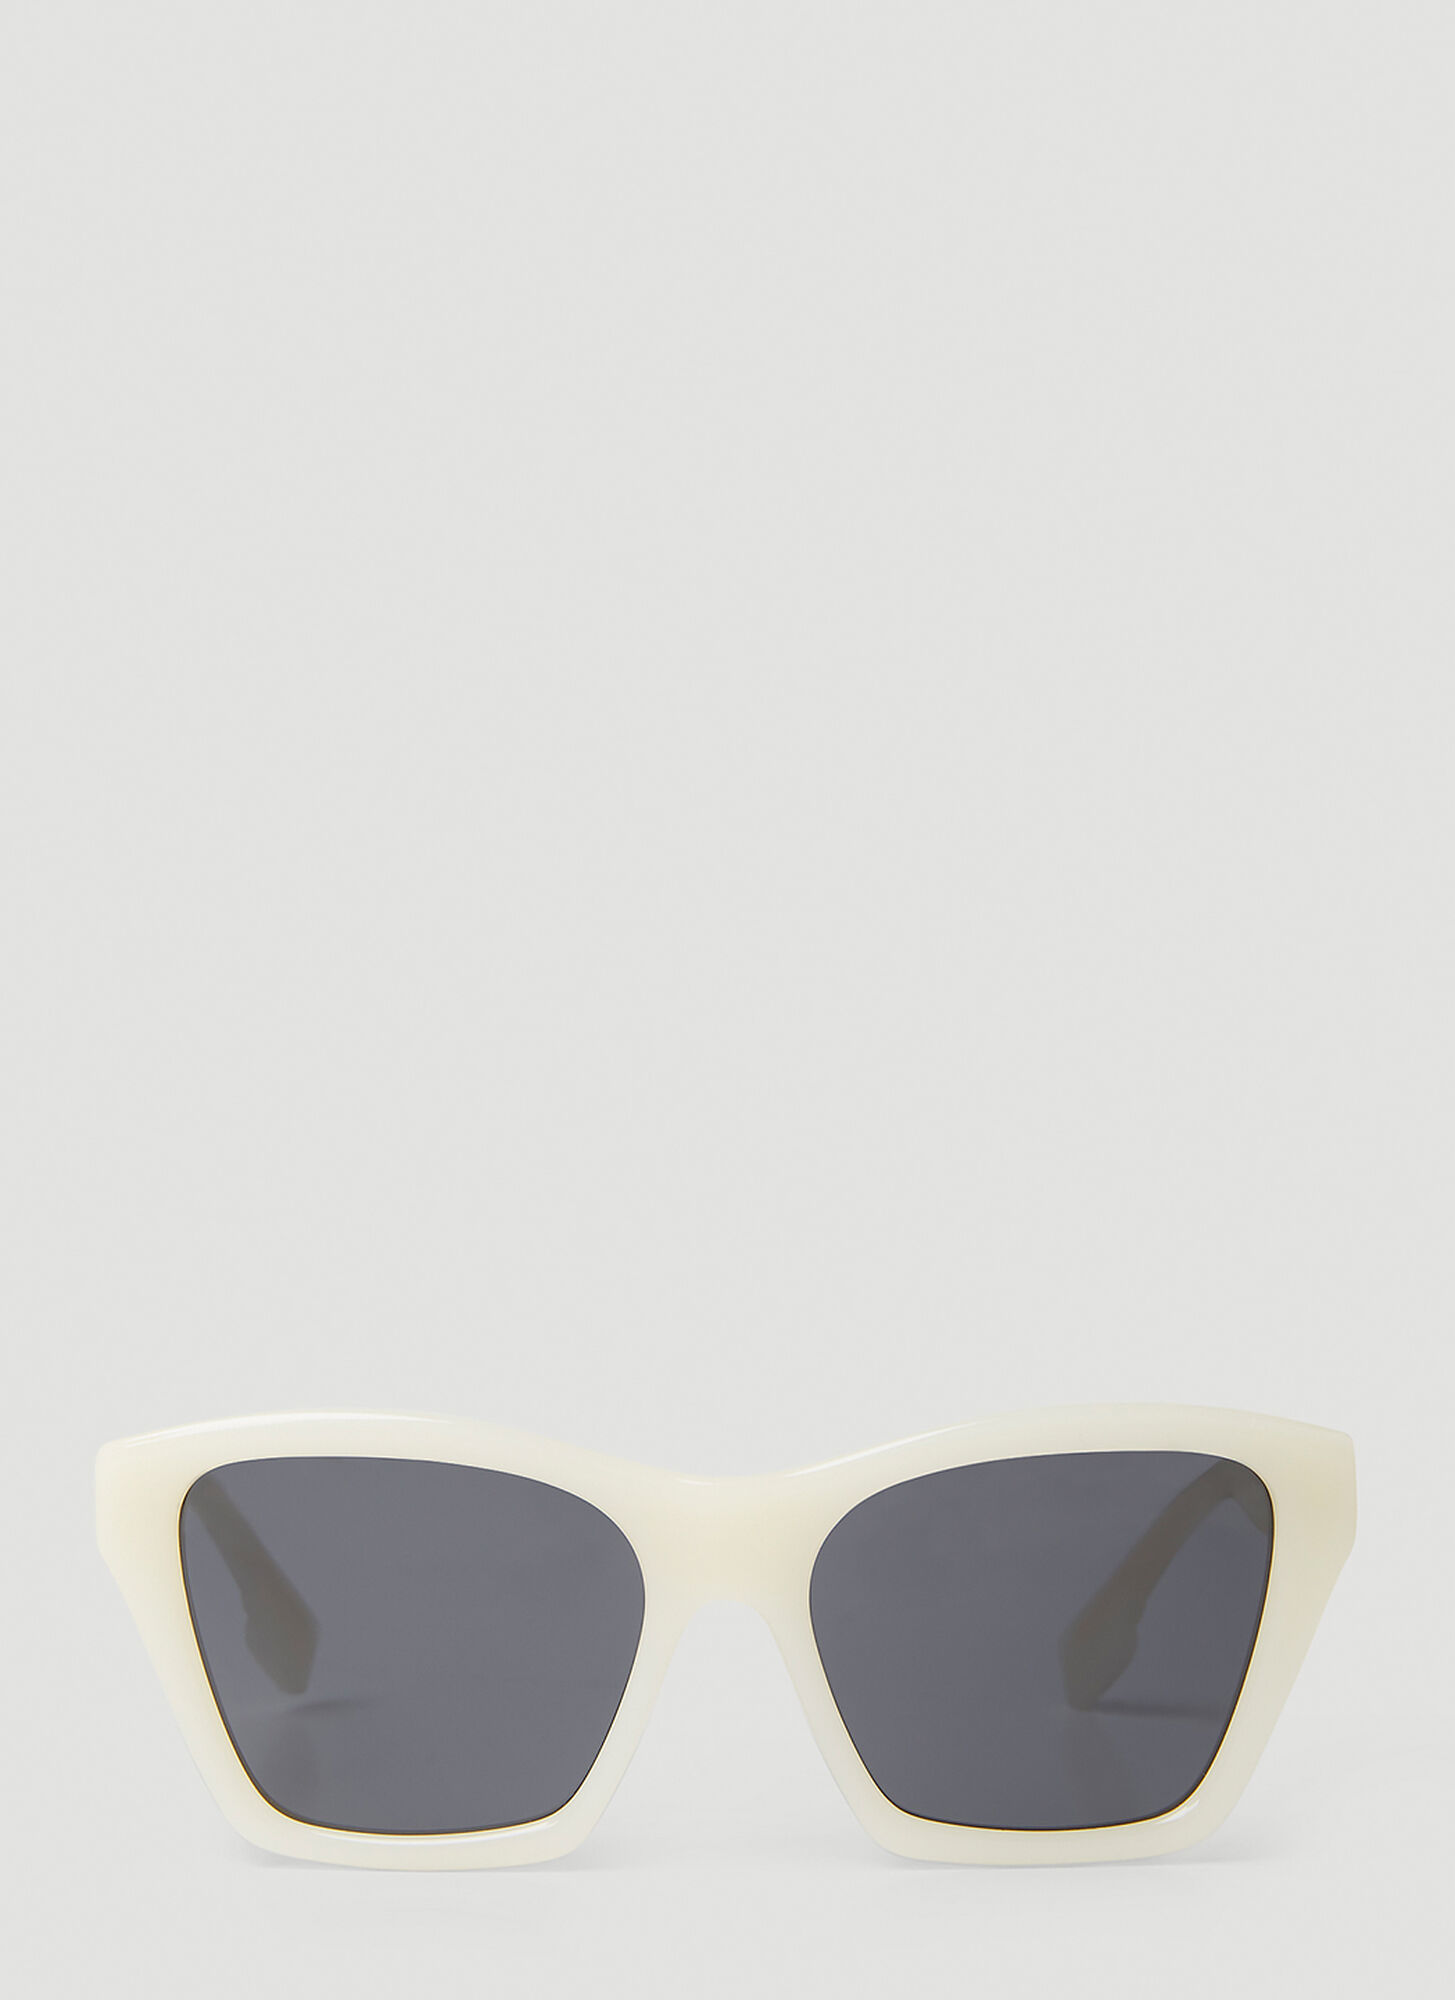 Burberry Arden Sunglasses